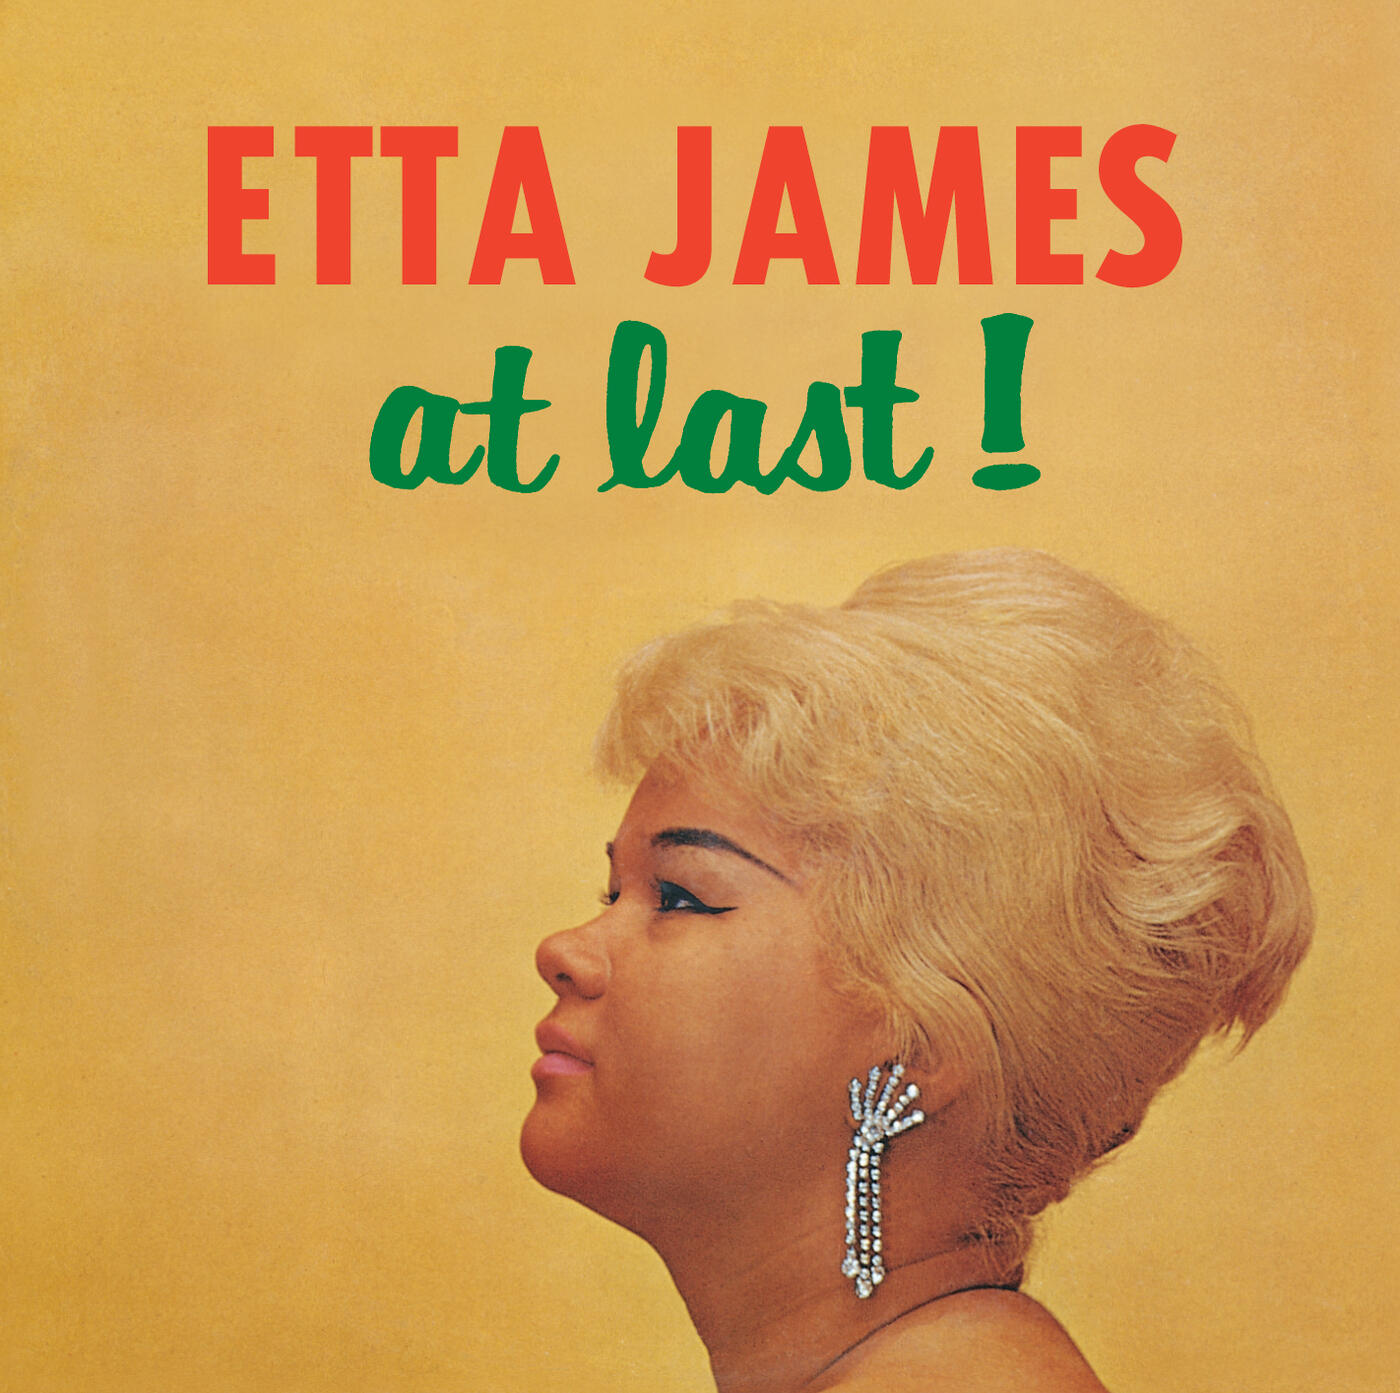 Stream Free Songs by Etta James & Similar Artists iHeartRadio.